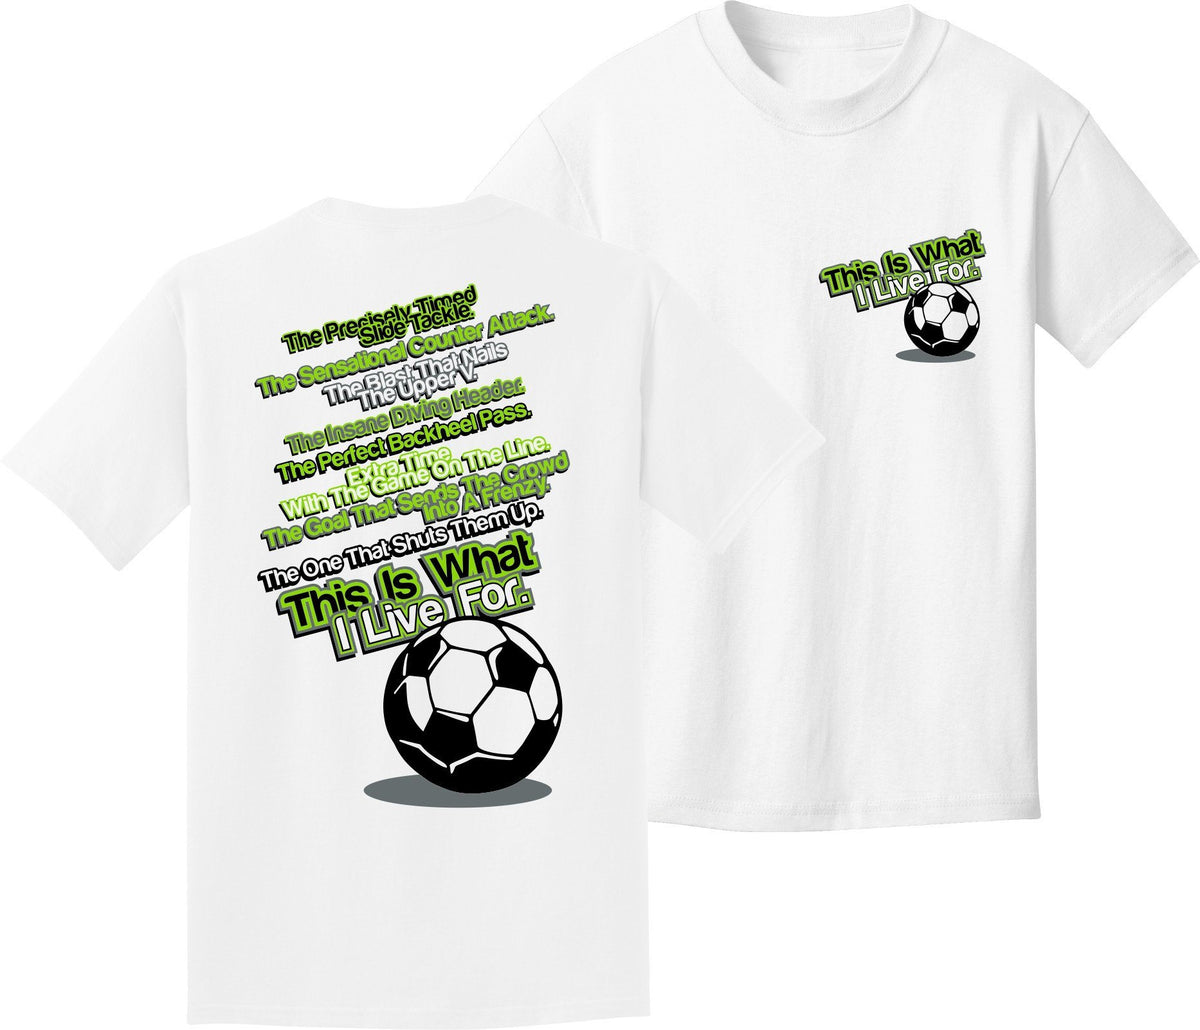 Utopia I Live For Short Sleeve Soccer T-Shirt Humorous Shirt Utopia Adult Small White 